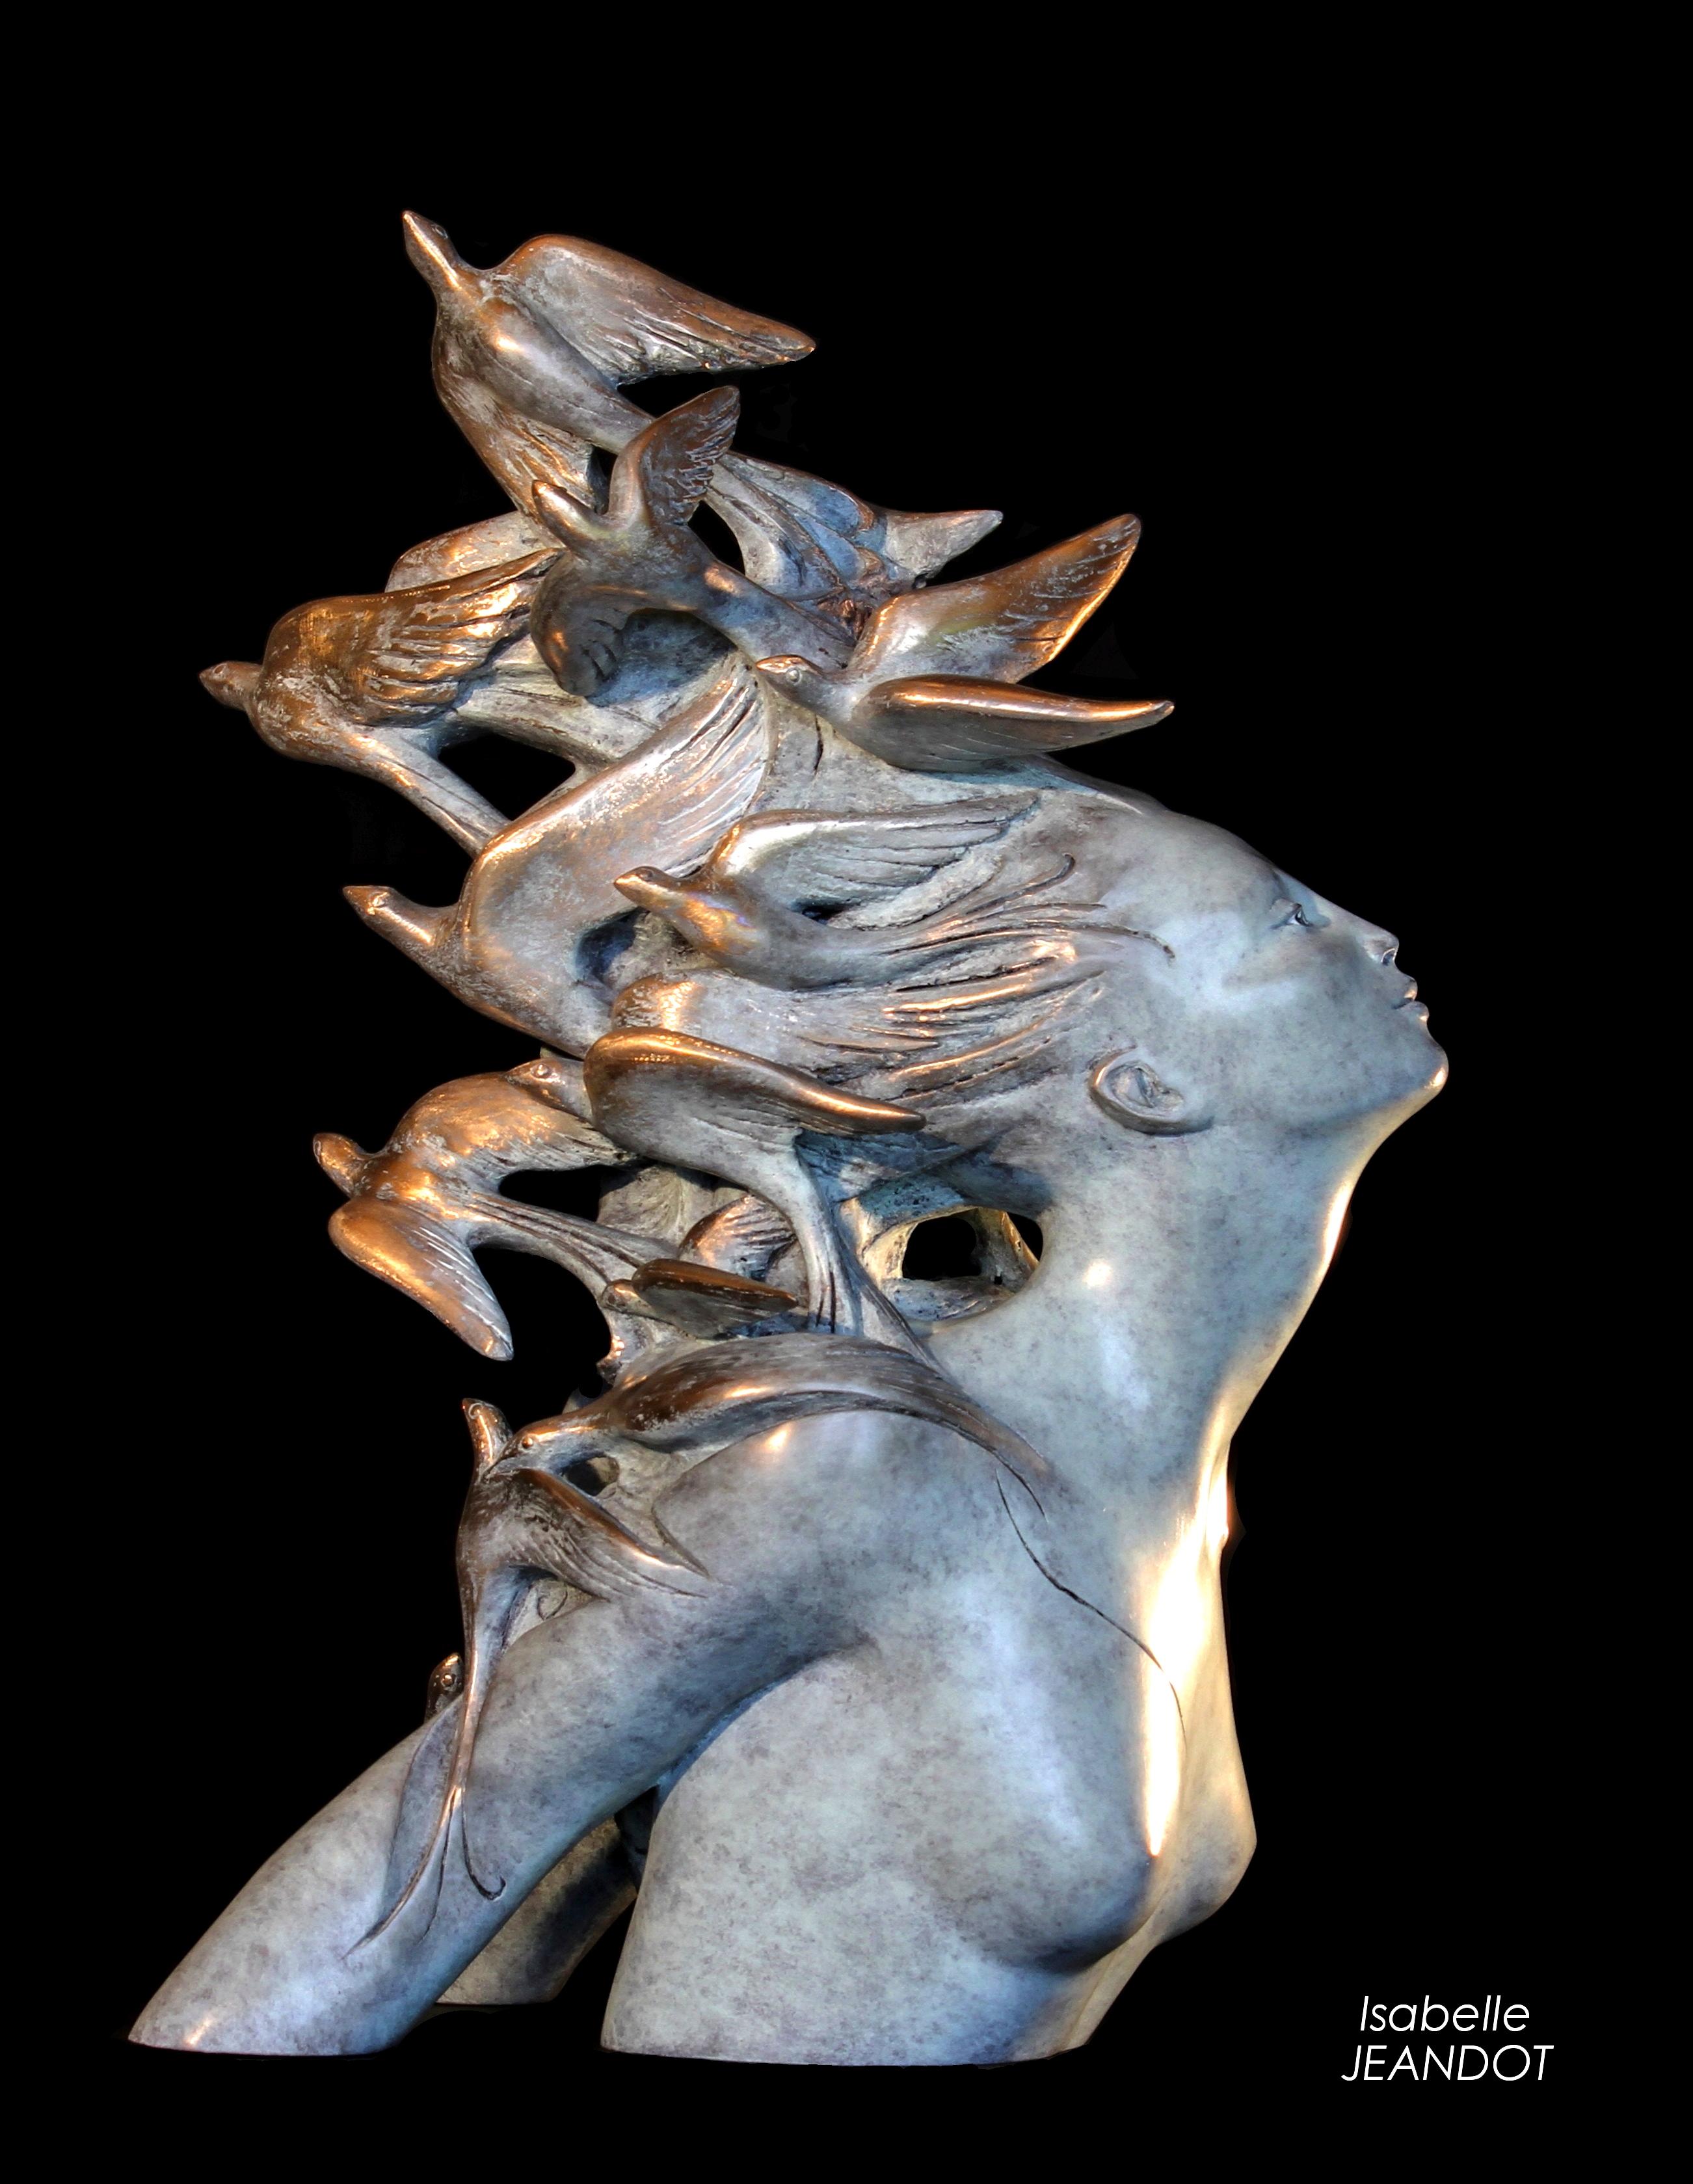 Isabelle Jeandot Figurative Sculpture - "Samadhi", Figurative Nude and Birds Spirit Awakening Symbolism Bronze Sculpture